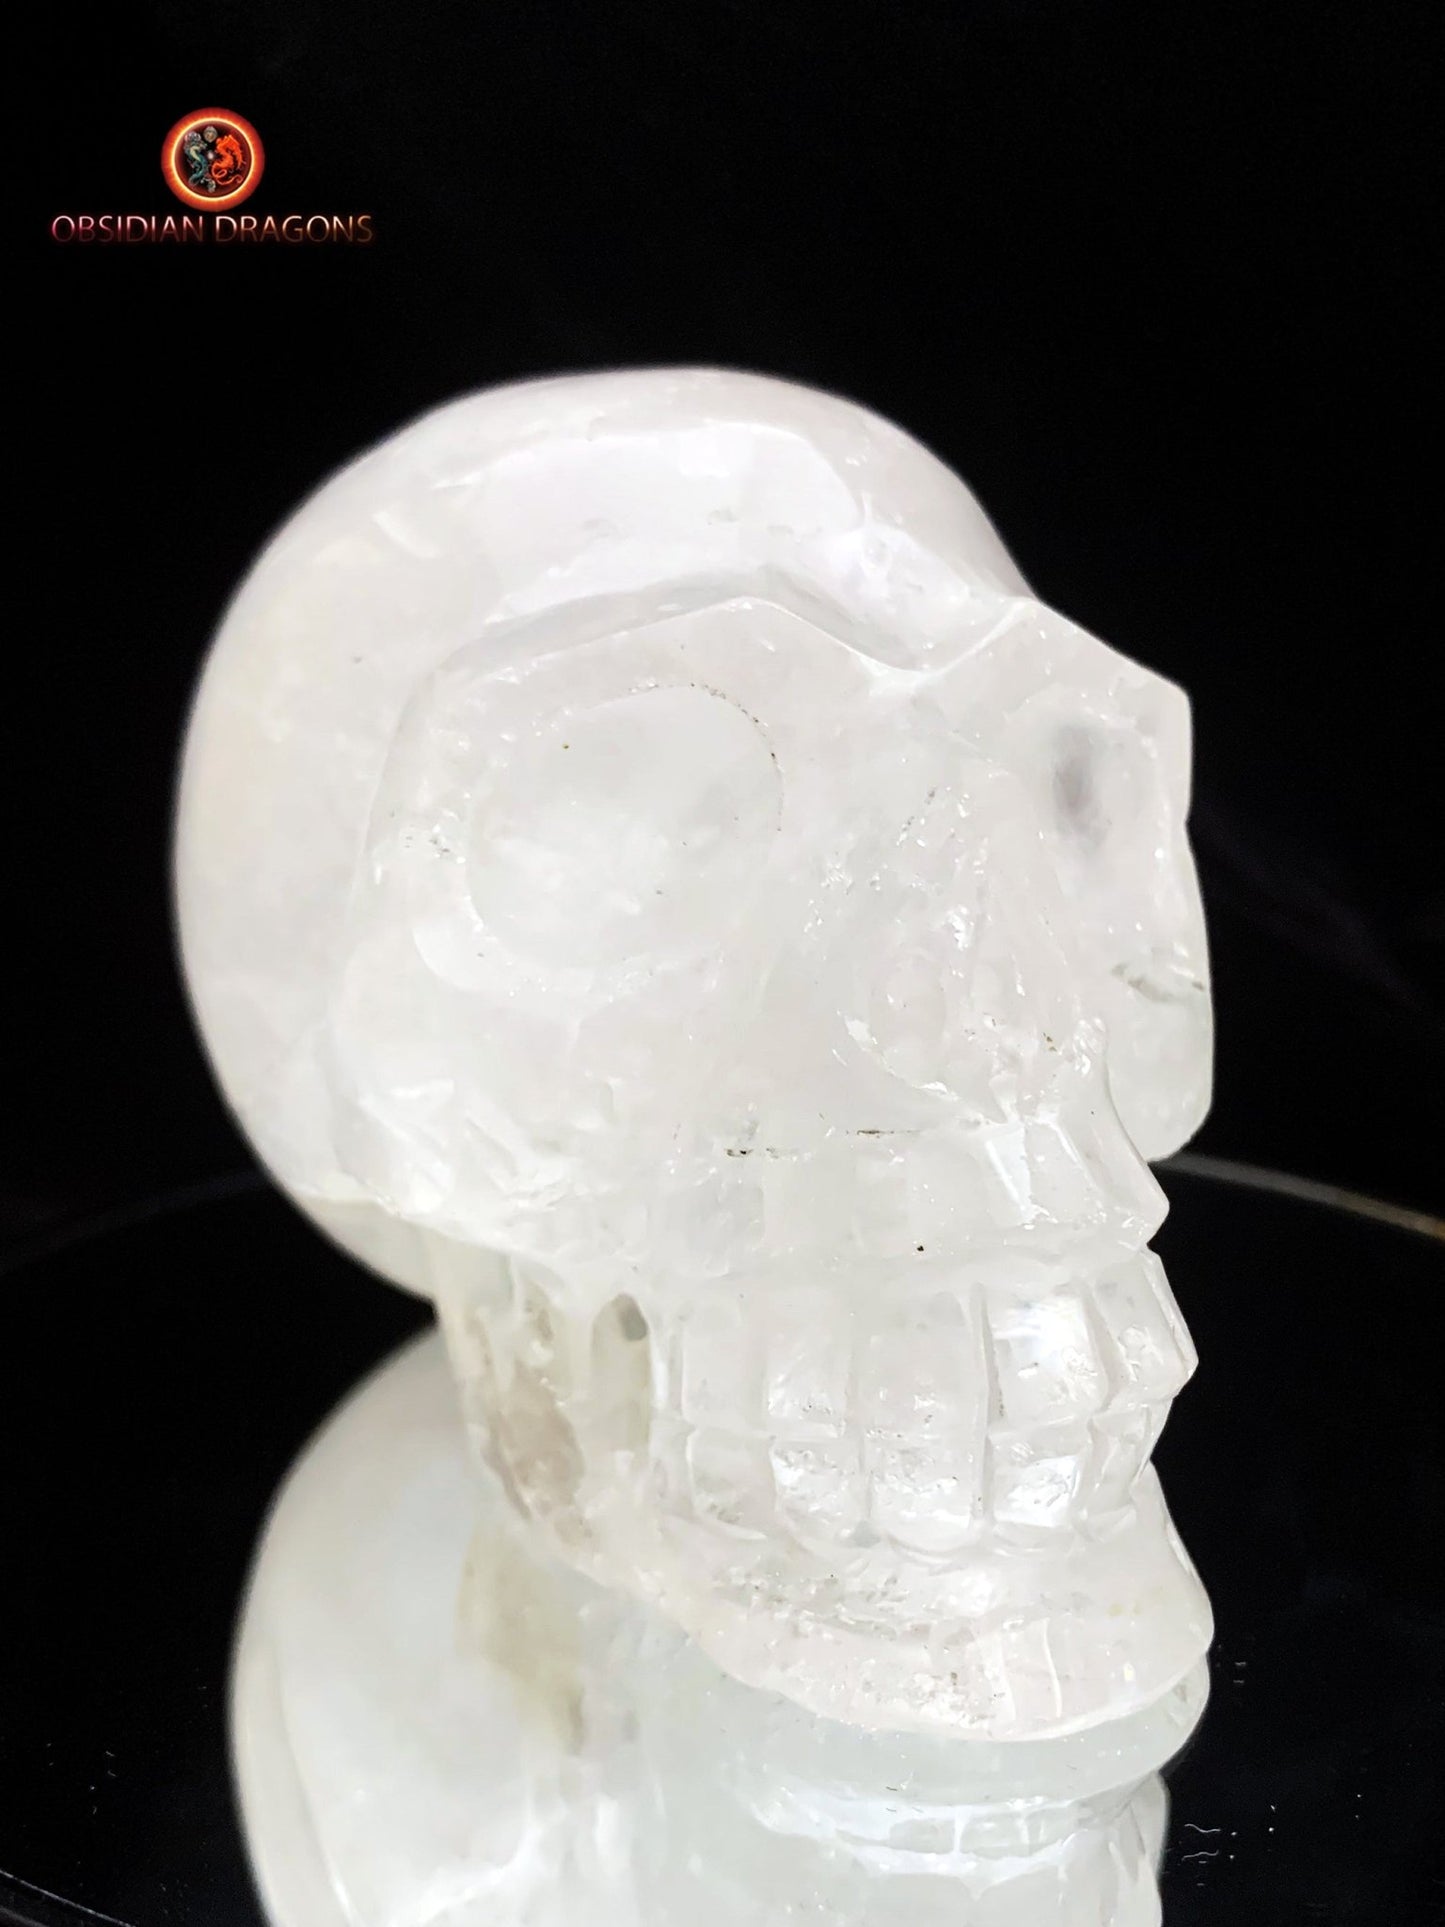 crâne de cristal unique- Himalaya- artisanal | obsidian dragons